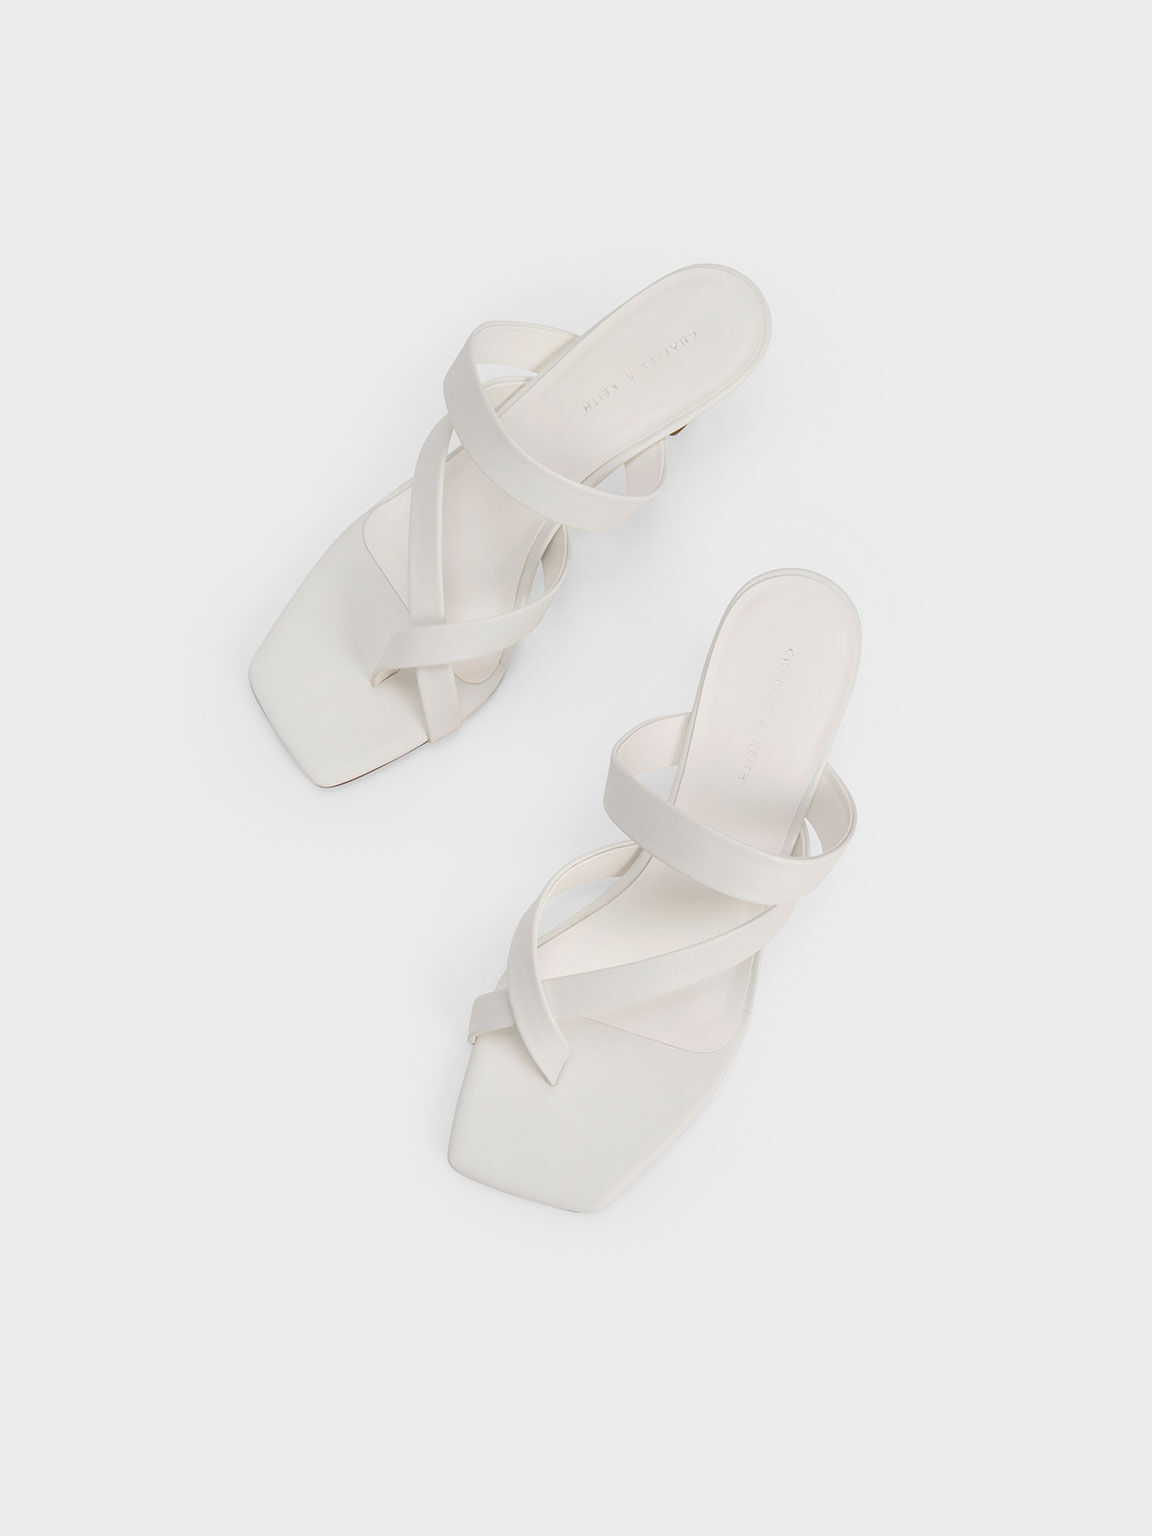 Asymmetric Toe Ring Heeled Sandals, White, hi-res